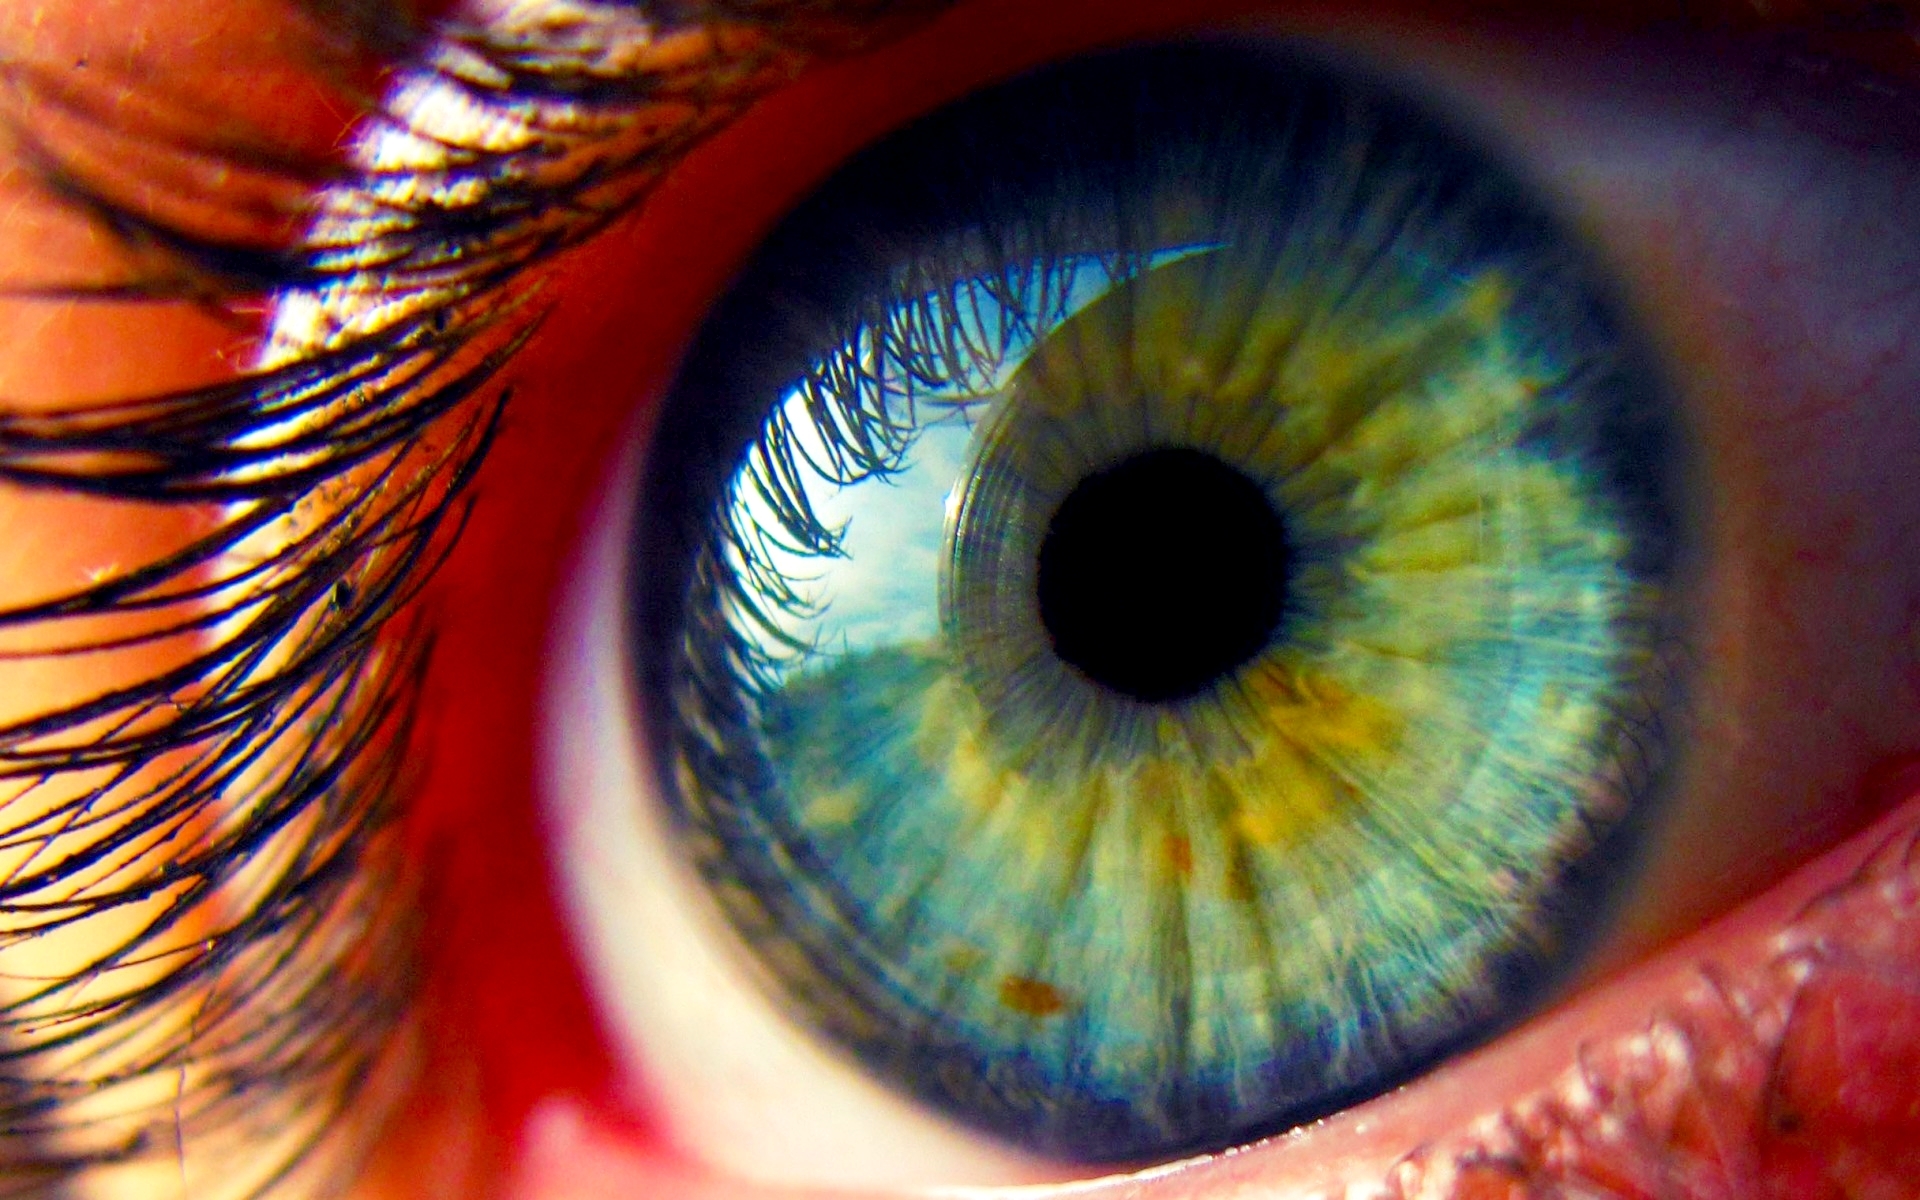 eyelash-reflection-in-the-eye-macro-photography | Jasper Place Media ...